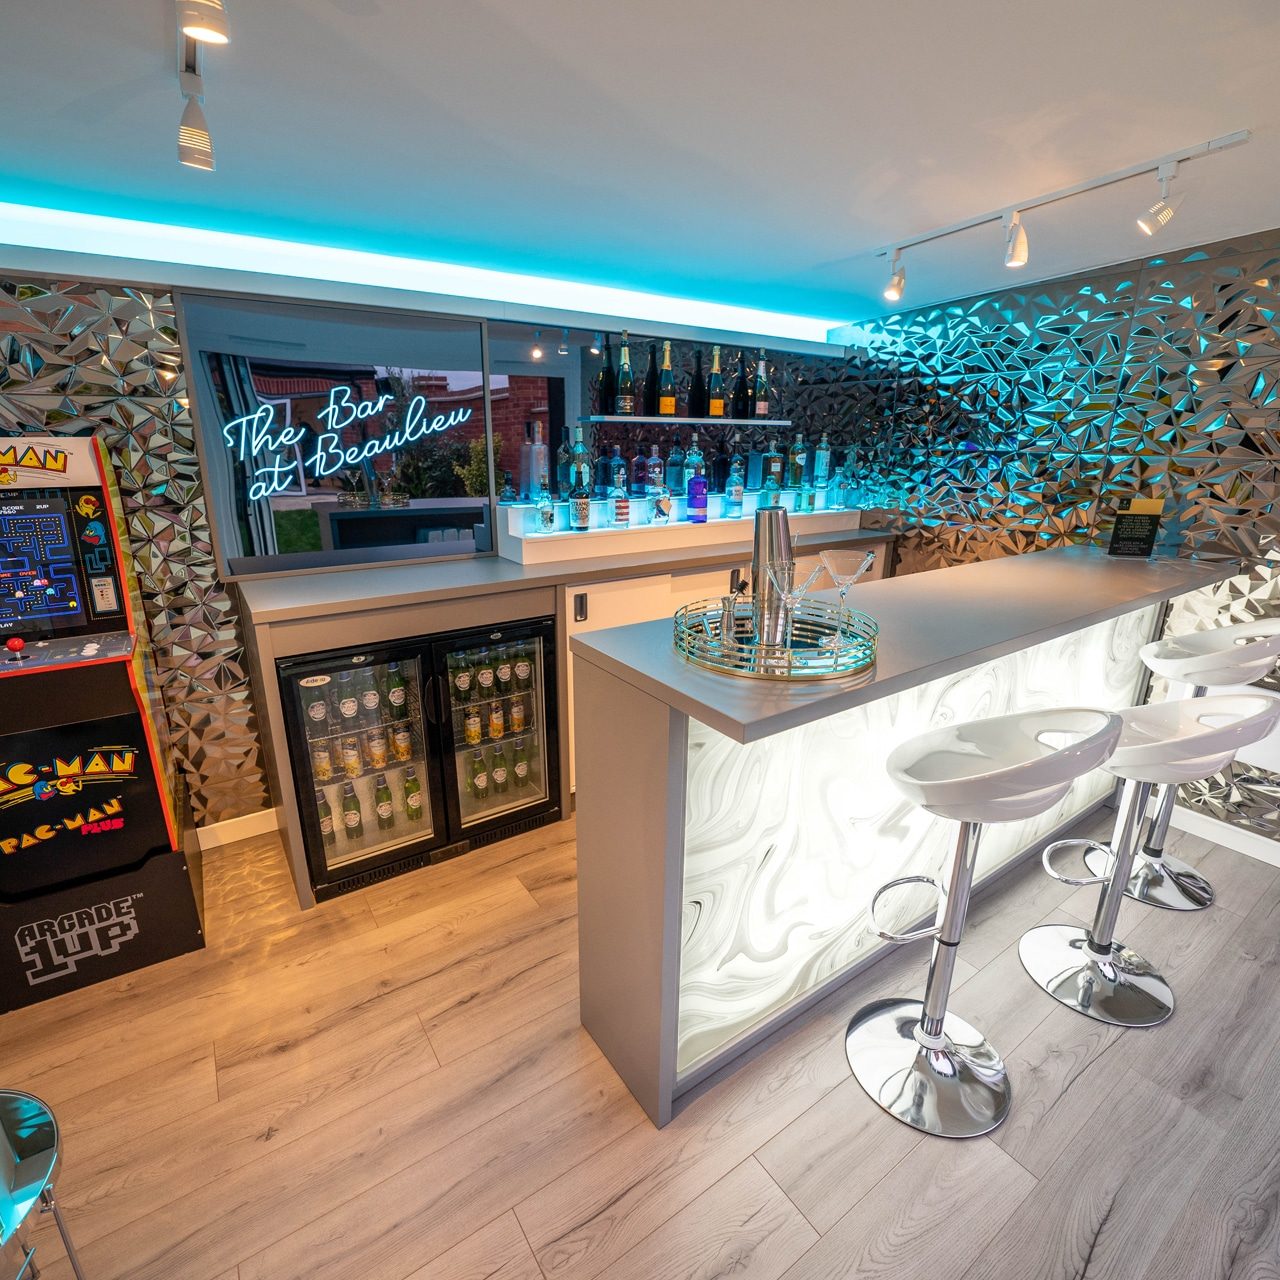 Interior of garden bar with light up bar, bar stools, drinks fridge and vintage pac man games machine.